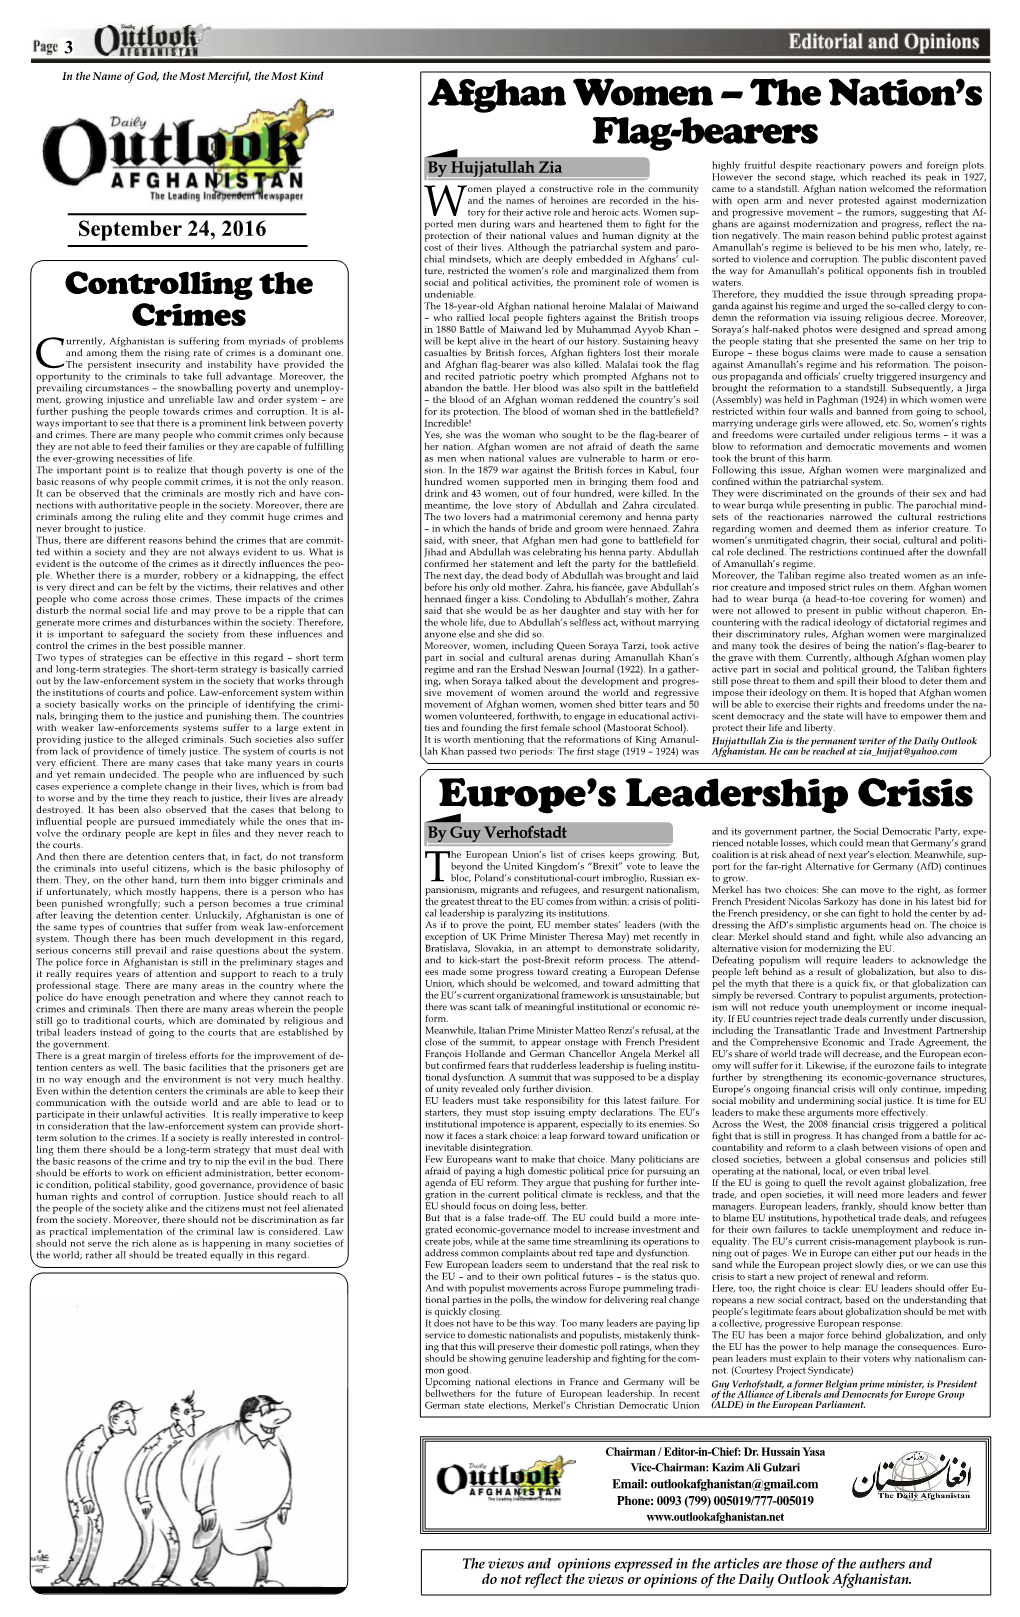 Europe's Leadership Crisis